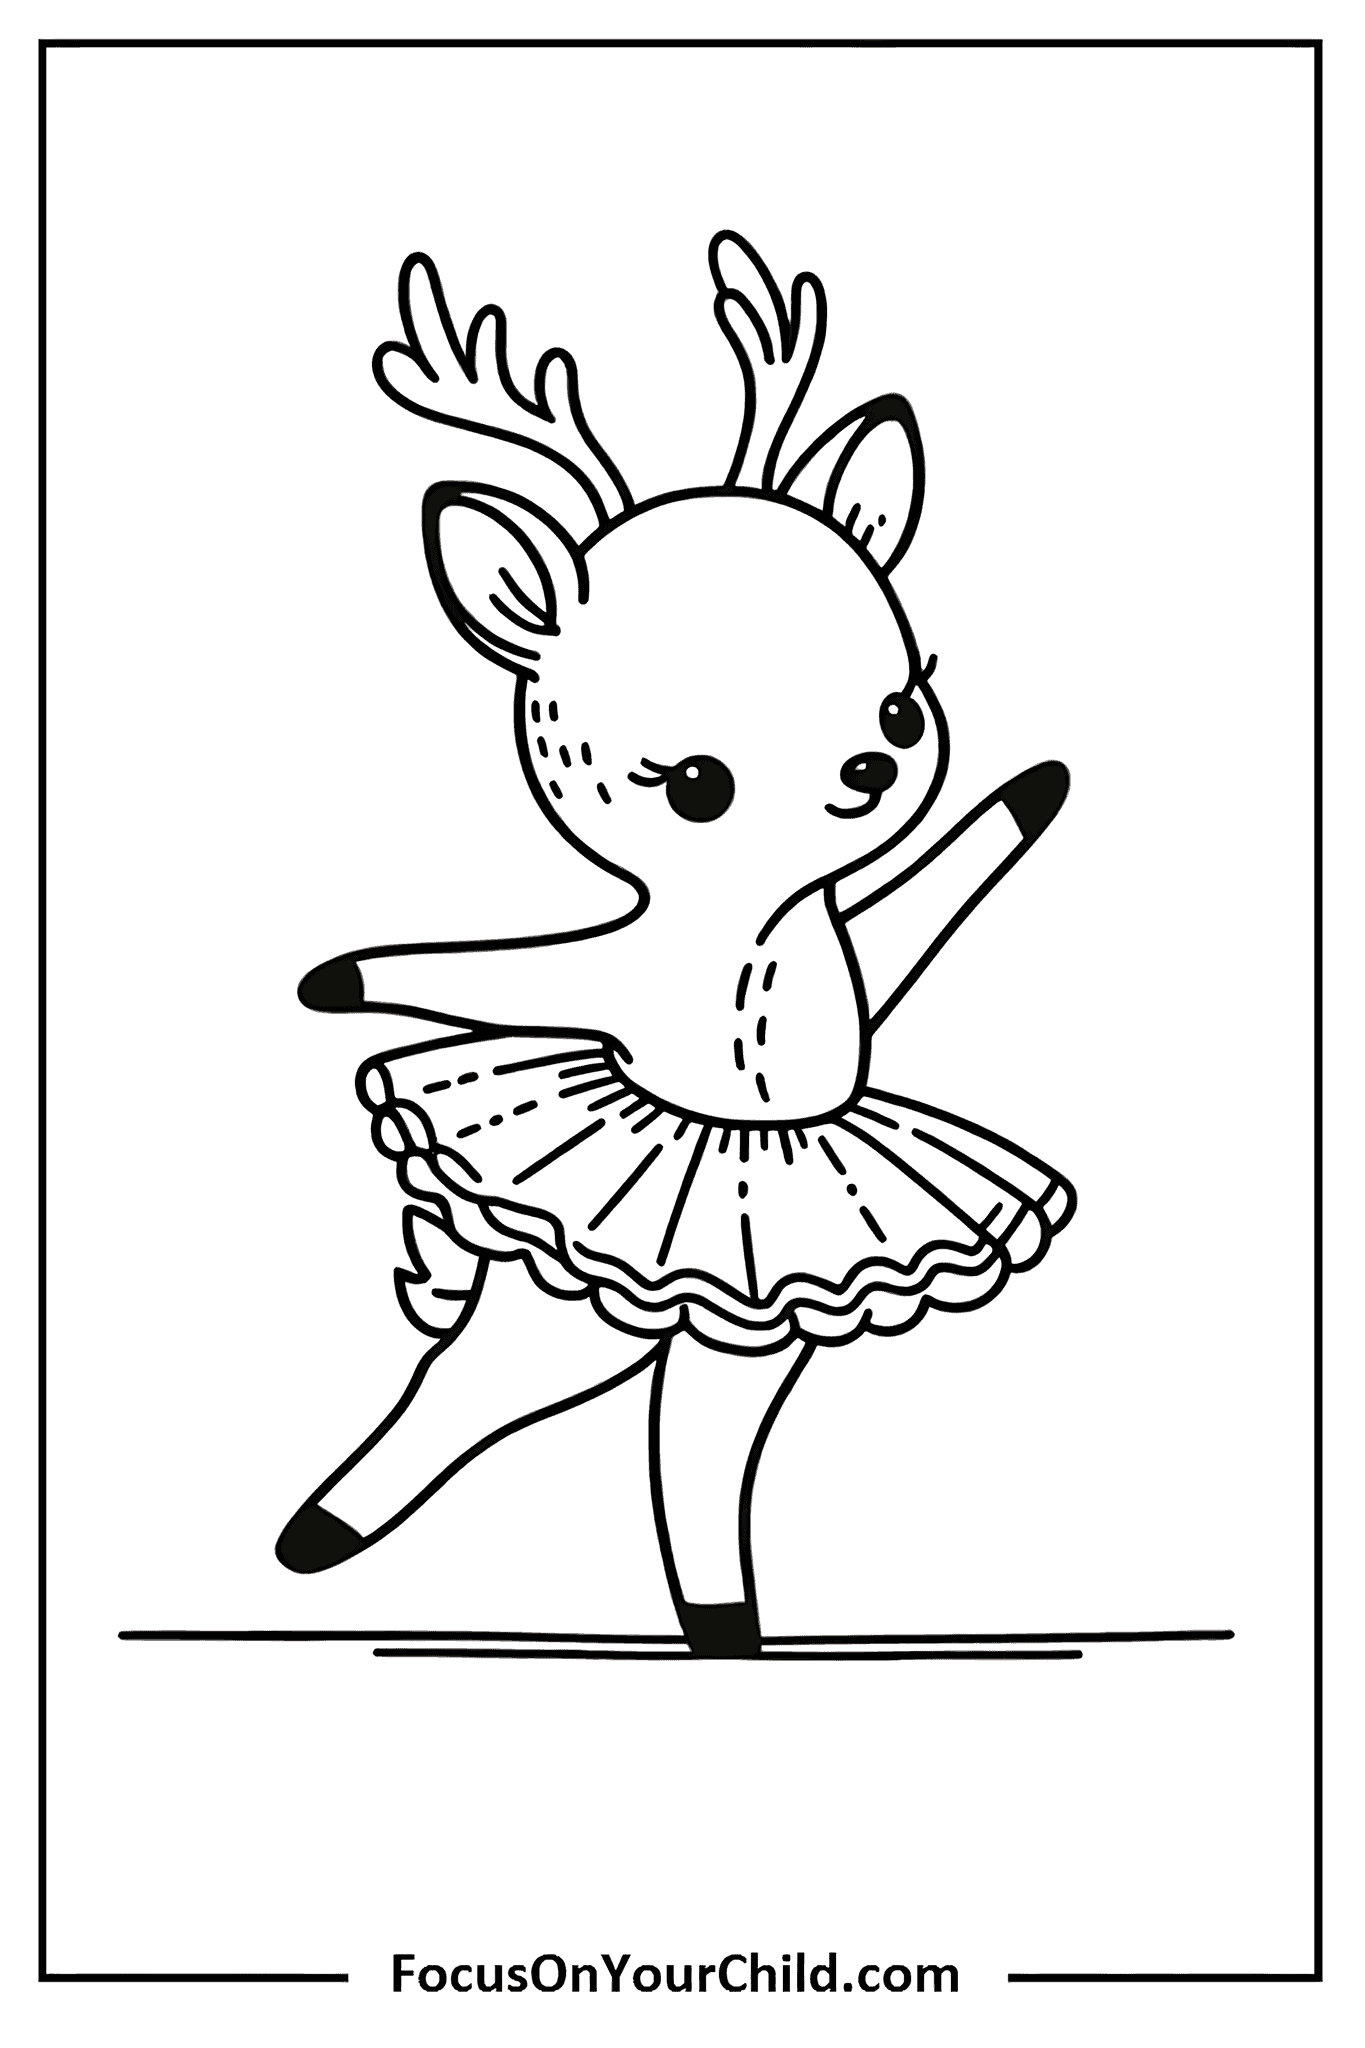 Cartoon deer ballet dancer for childrens coloring activity.